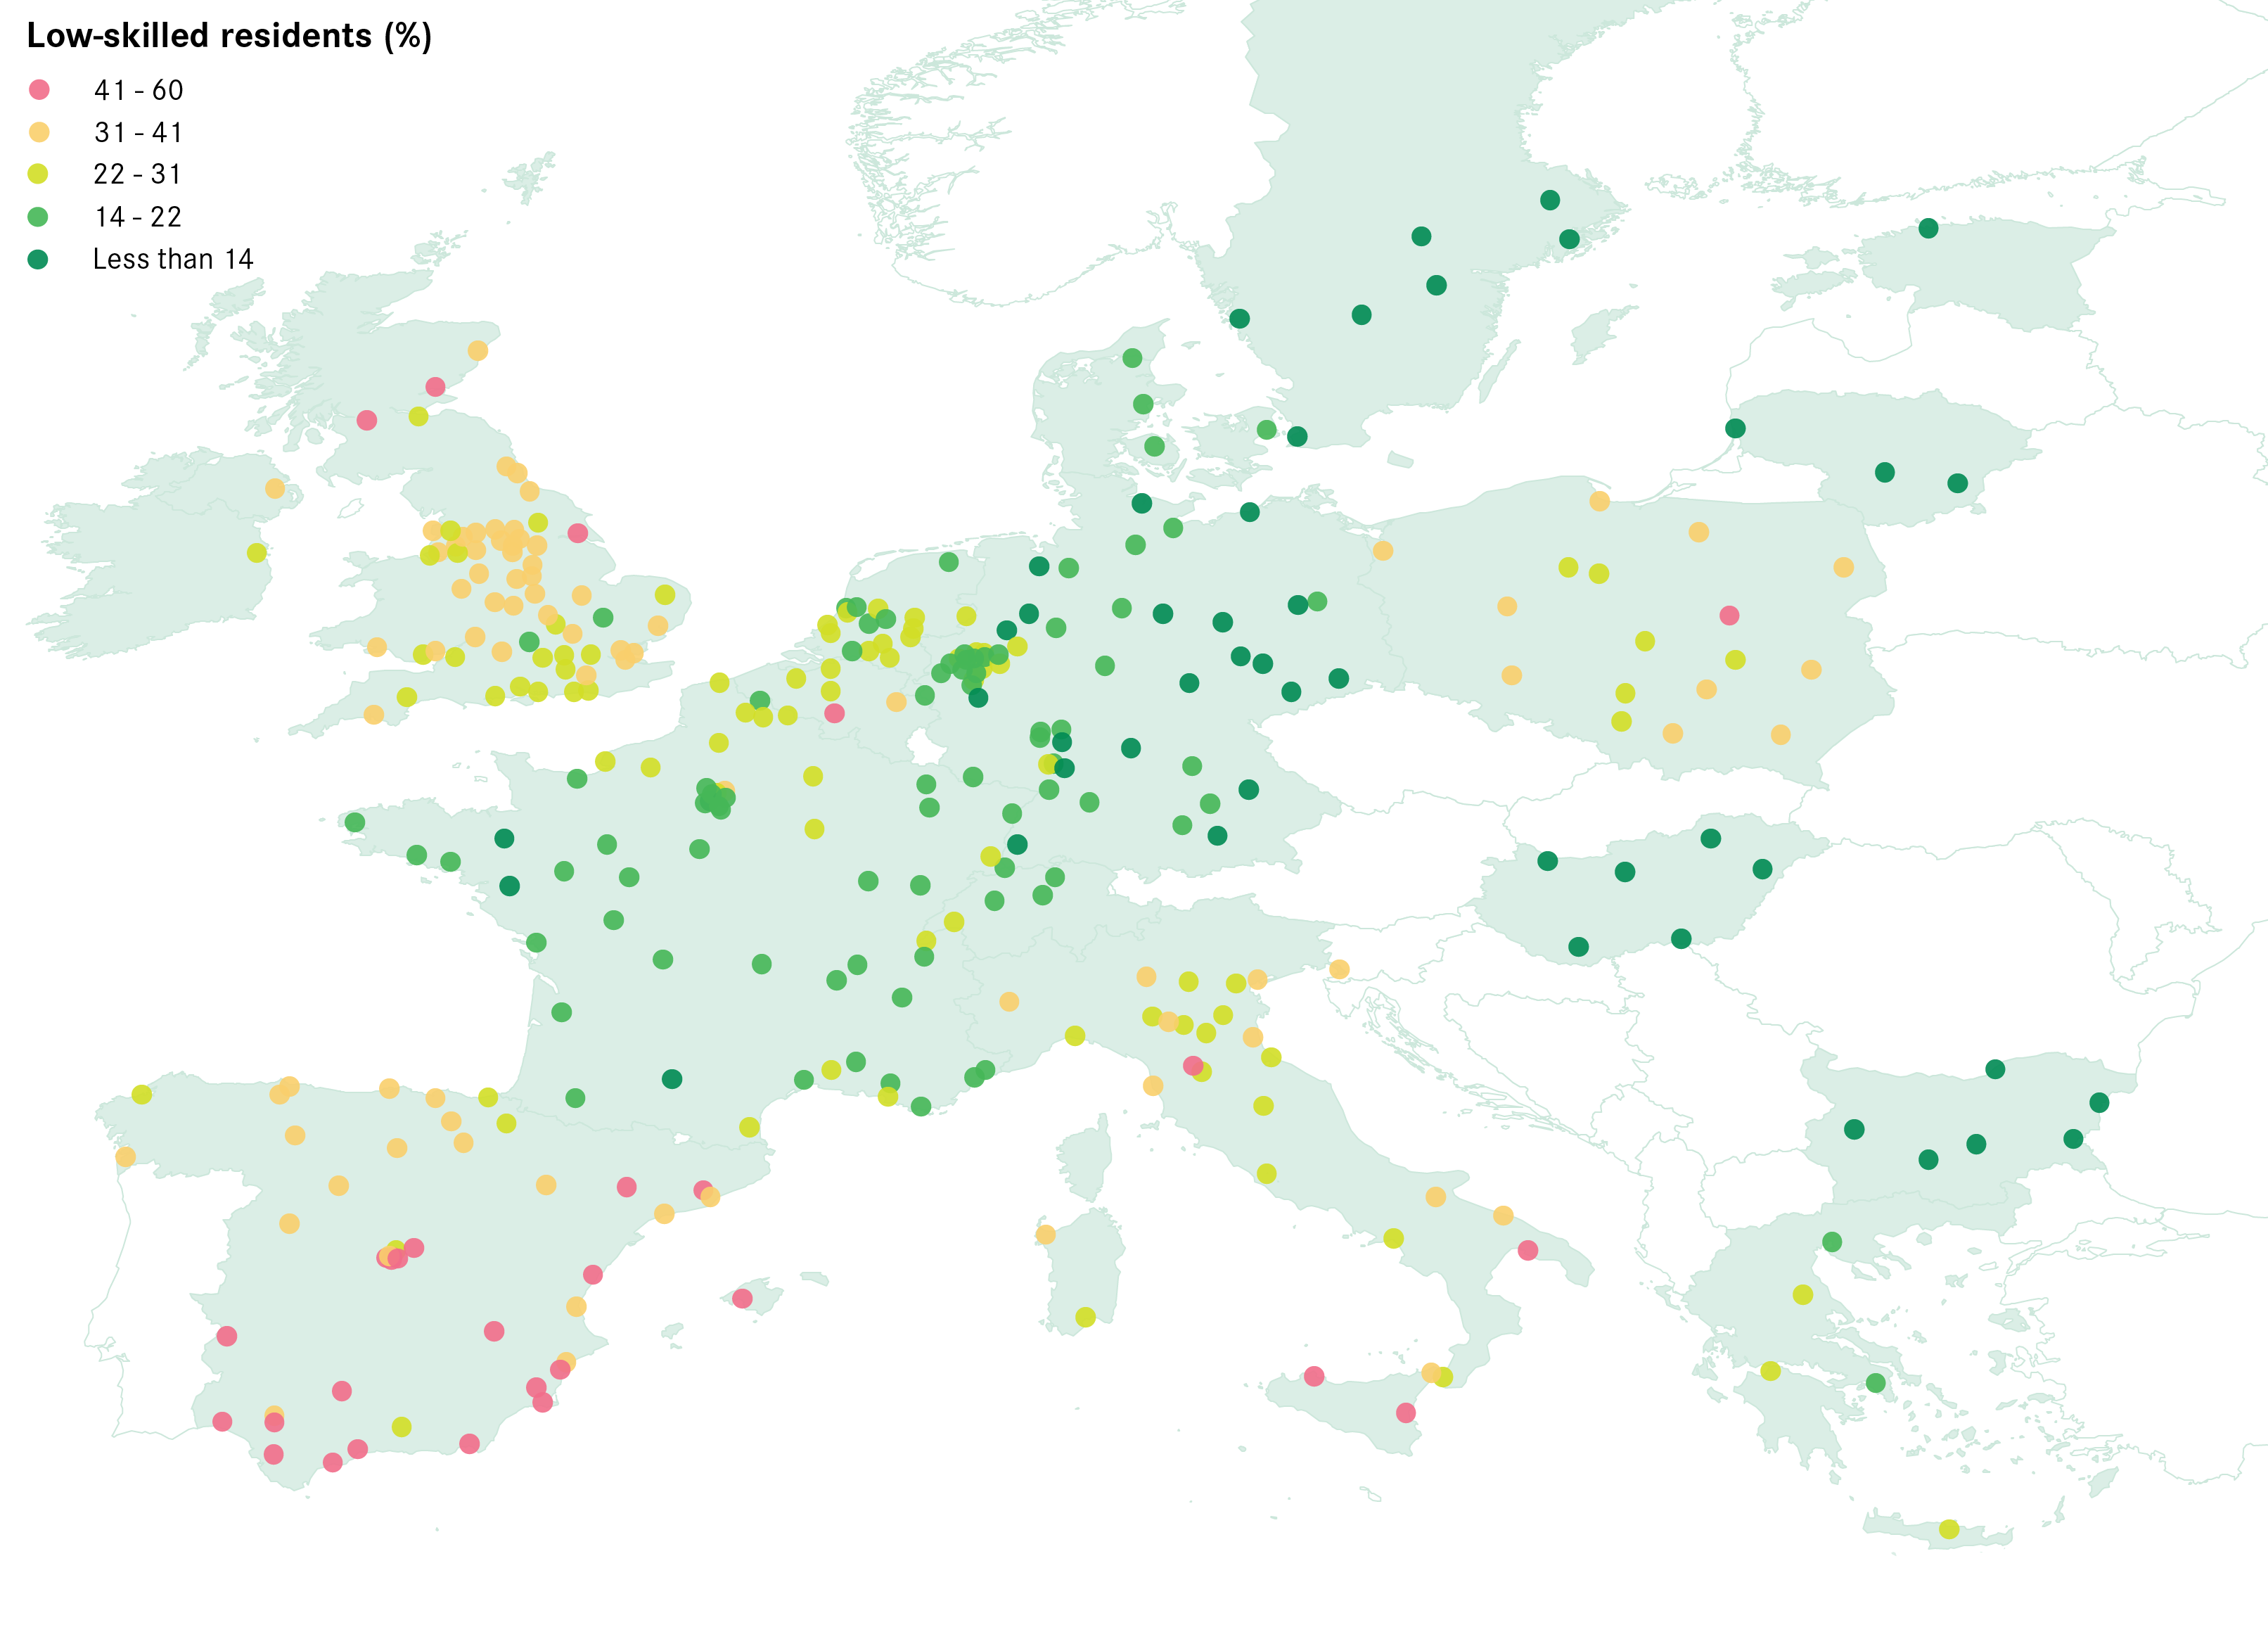 vedvarende ressource kartoffel øjenvipper City performance across Europe | Centre for Cities